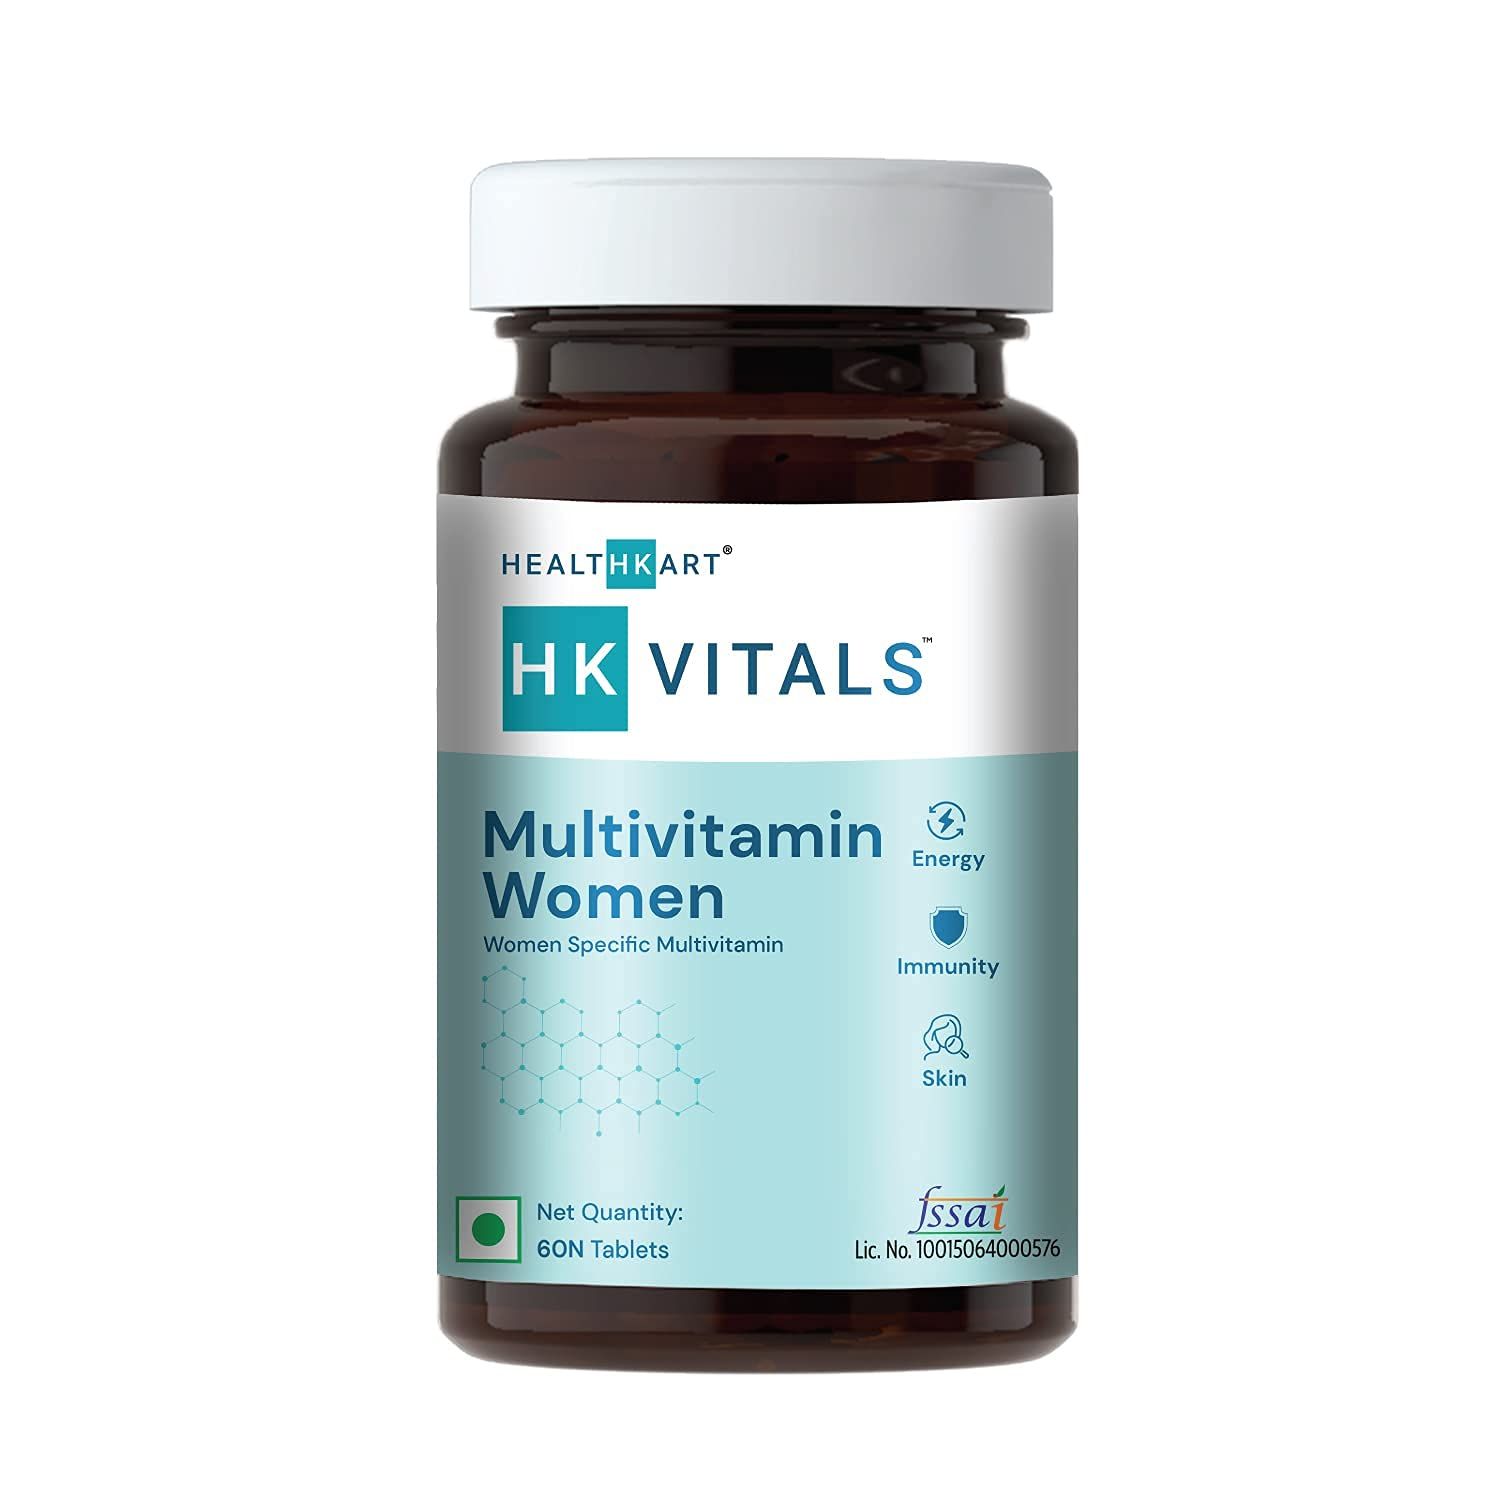 HK Vitals Multivitamin For Women Image